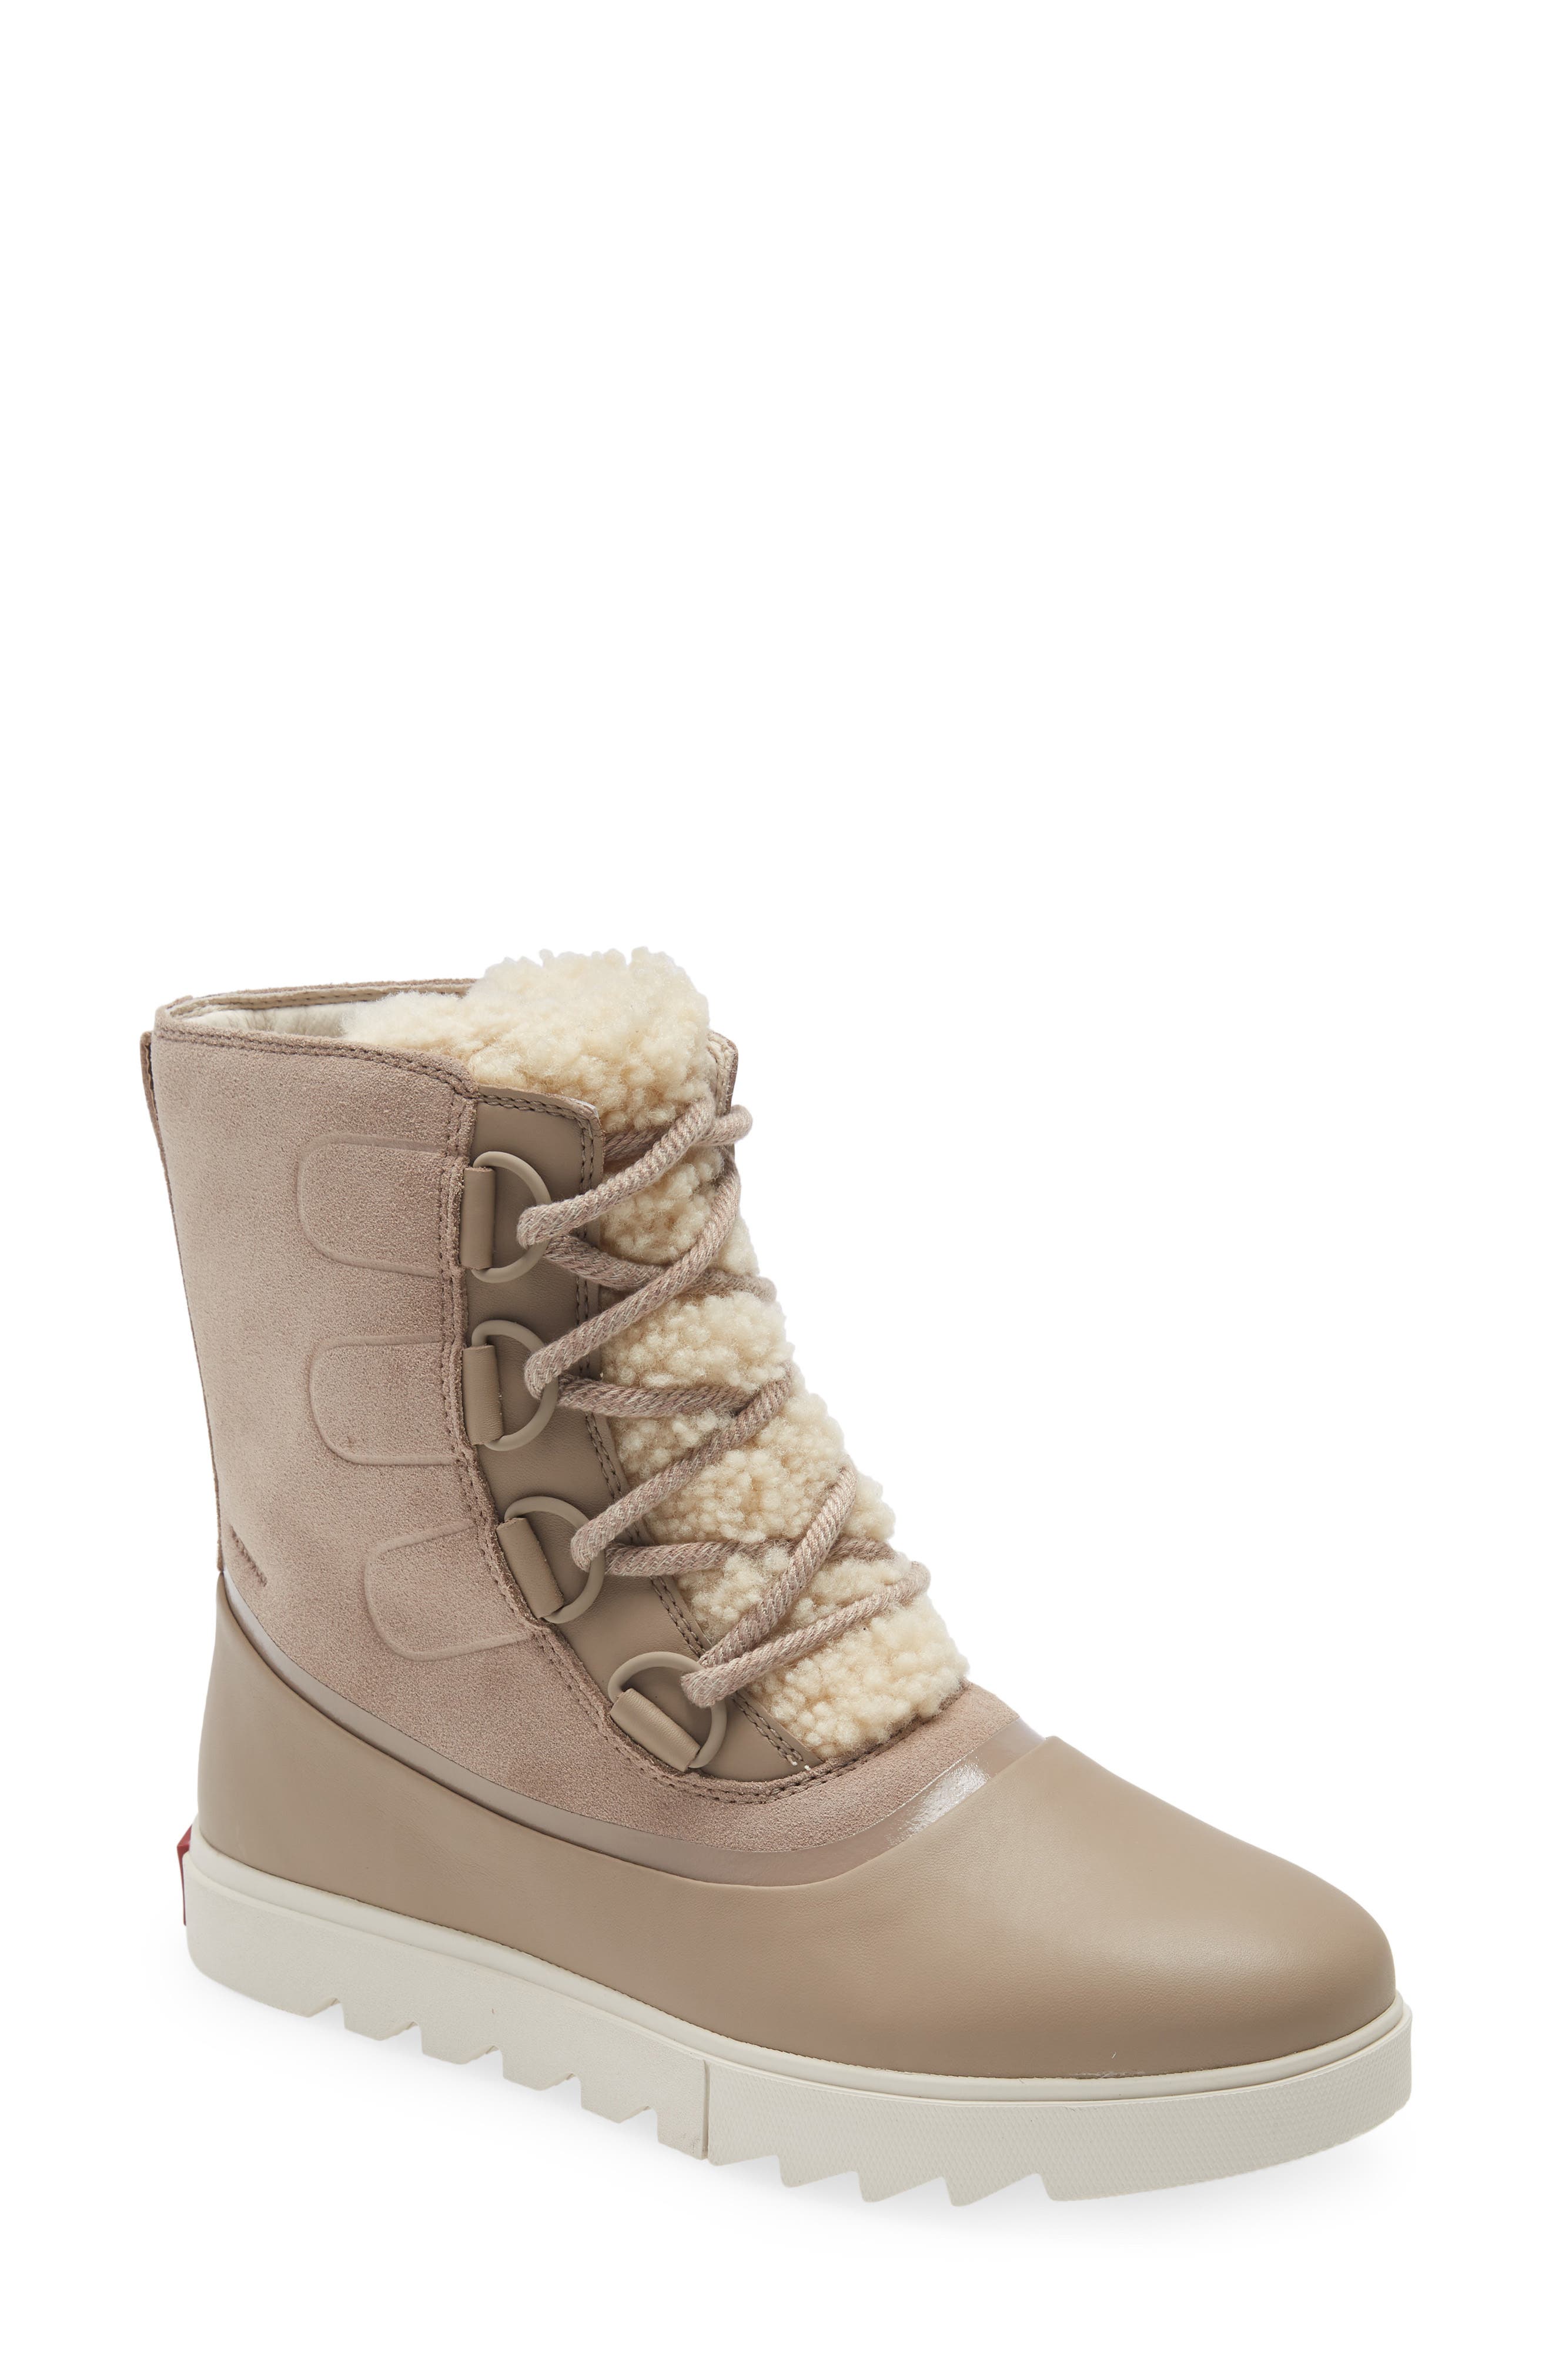 Edna Ladies Winter Snow Boots Beige Sizes 3-8 